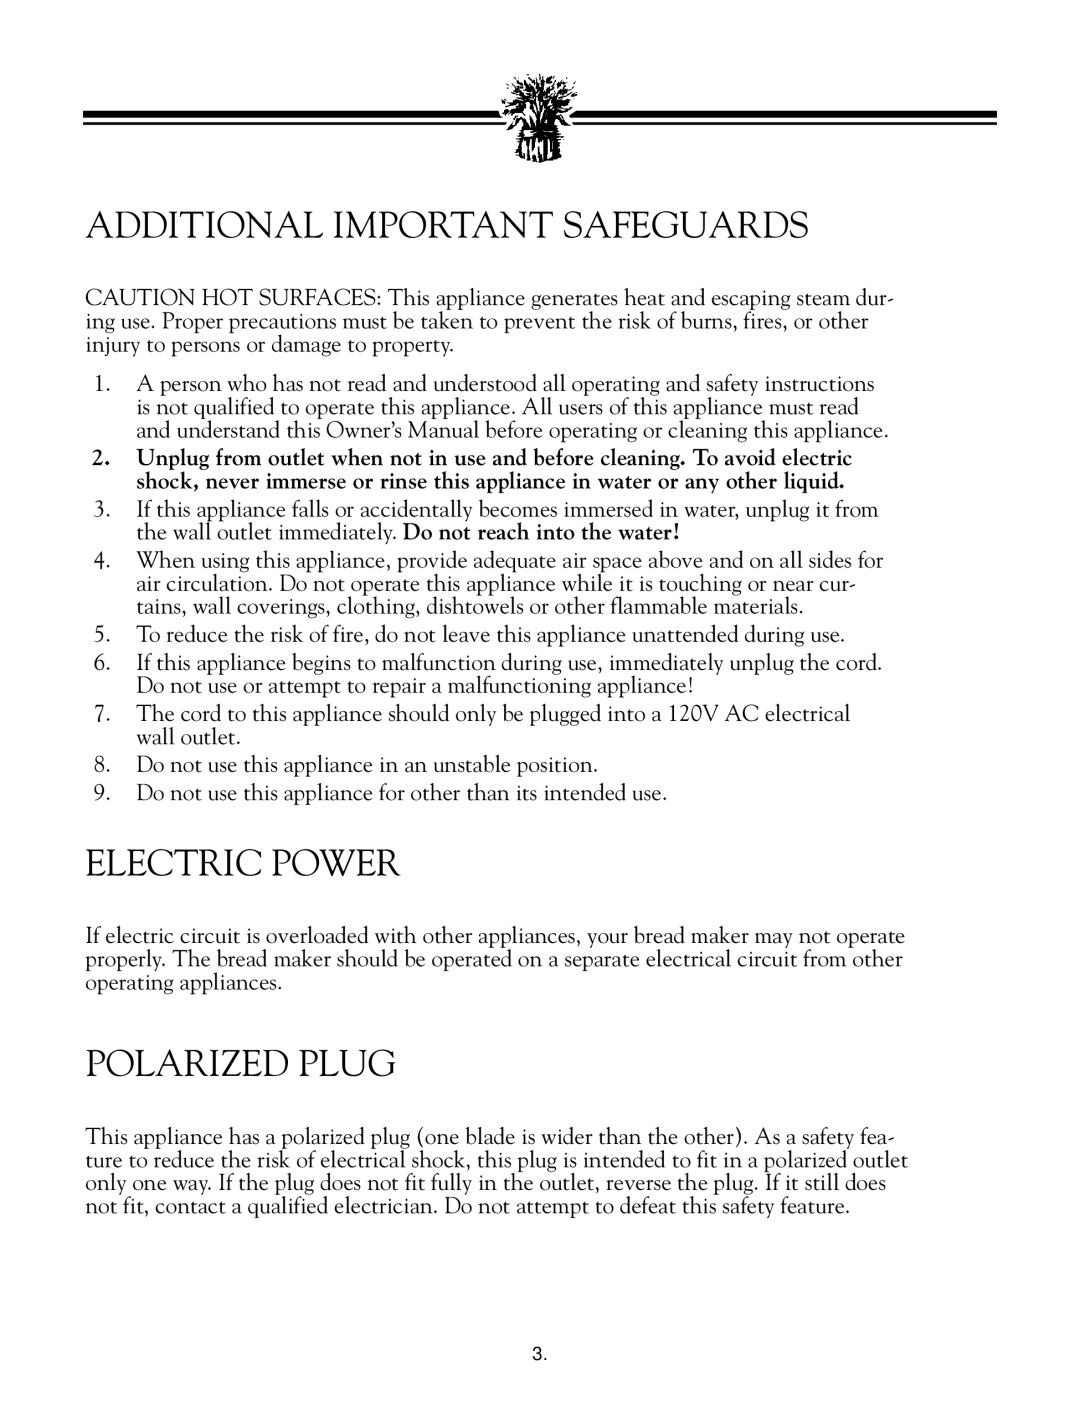 Breadman TR888 instruction manual Additional Important Safeguards, Electric Power, Polarized Plug 